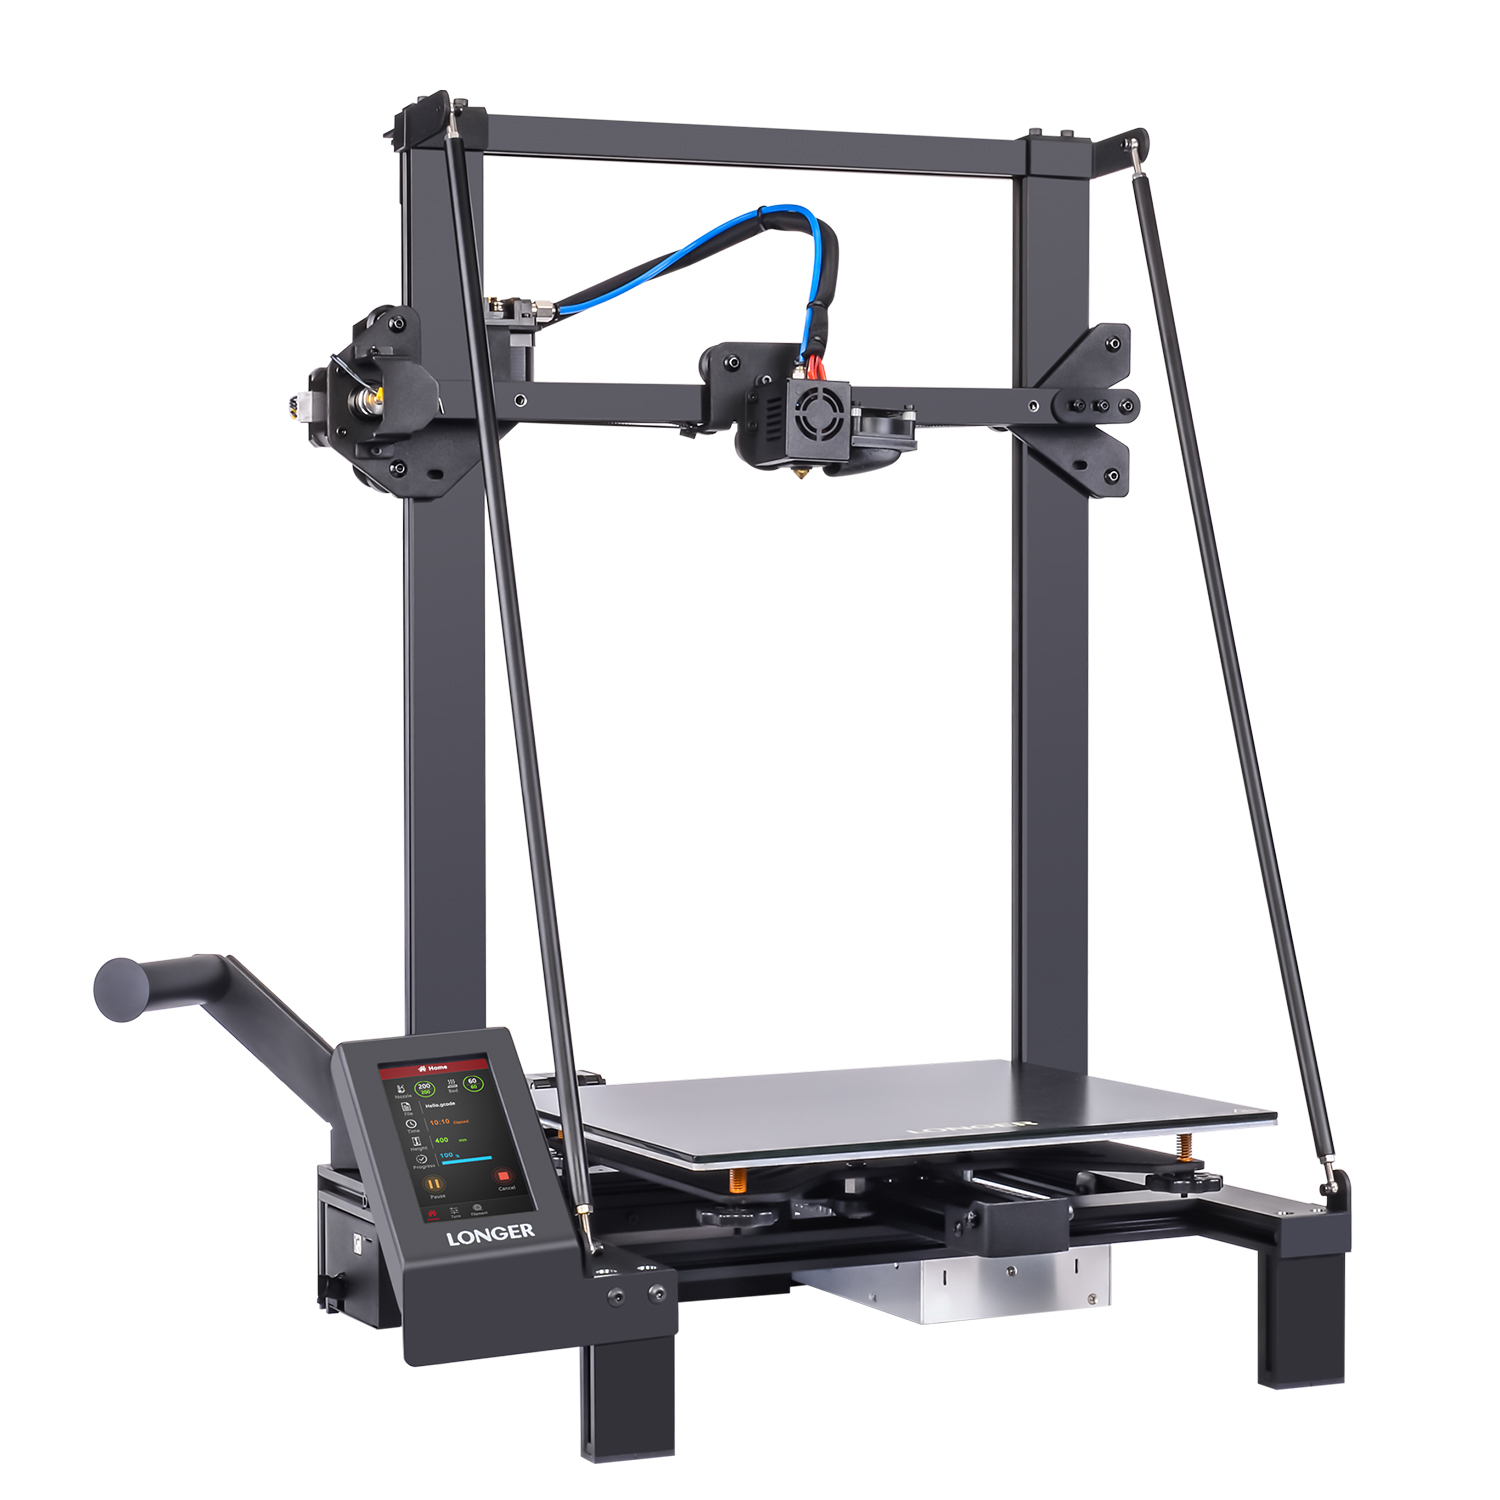 Find [EU Direce] LONGERÂ® LK5 Pro 3D Printer Kit 300x300x400mm Print Size for Sale on Gipsybee.com with cryptocurrencies